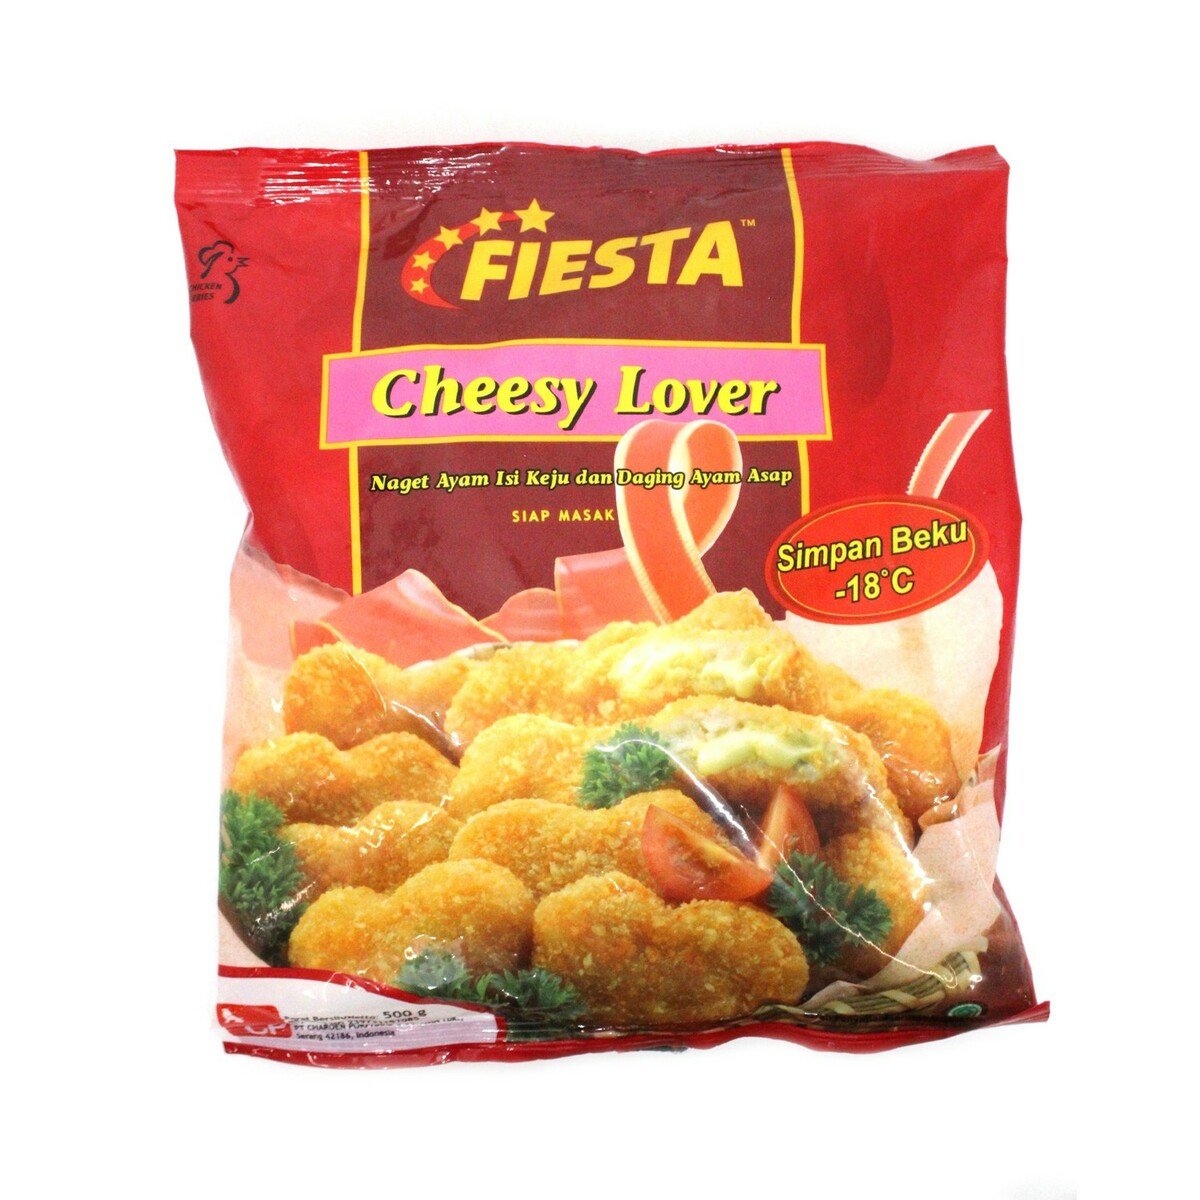 Fiesta Cheesy Lover 500g